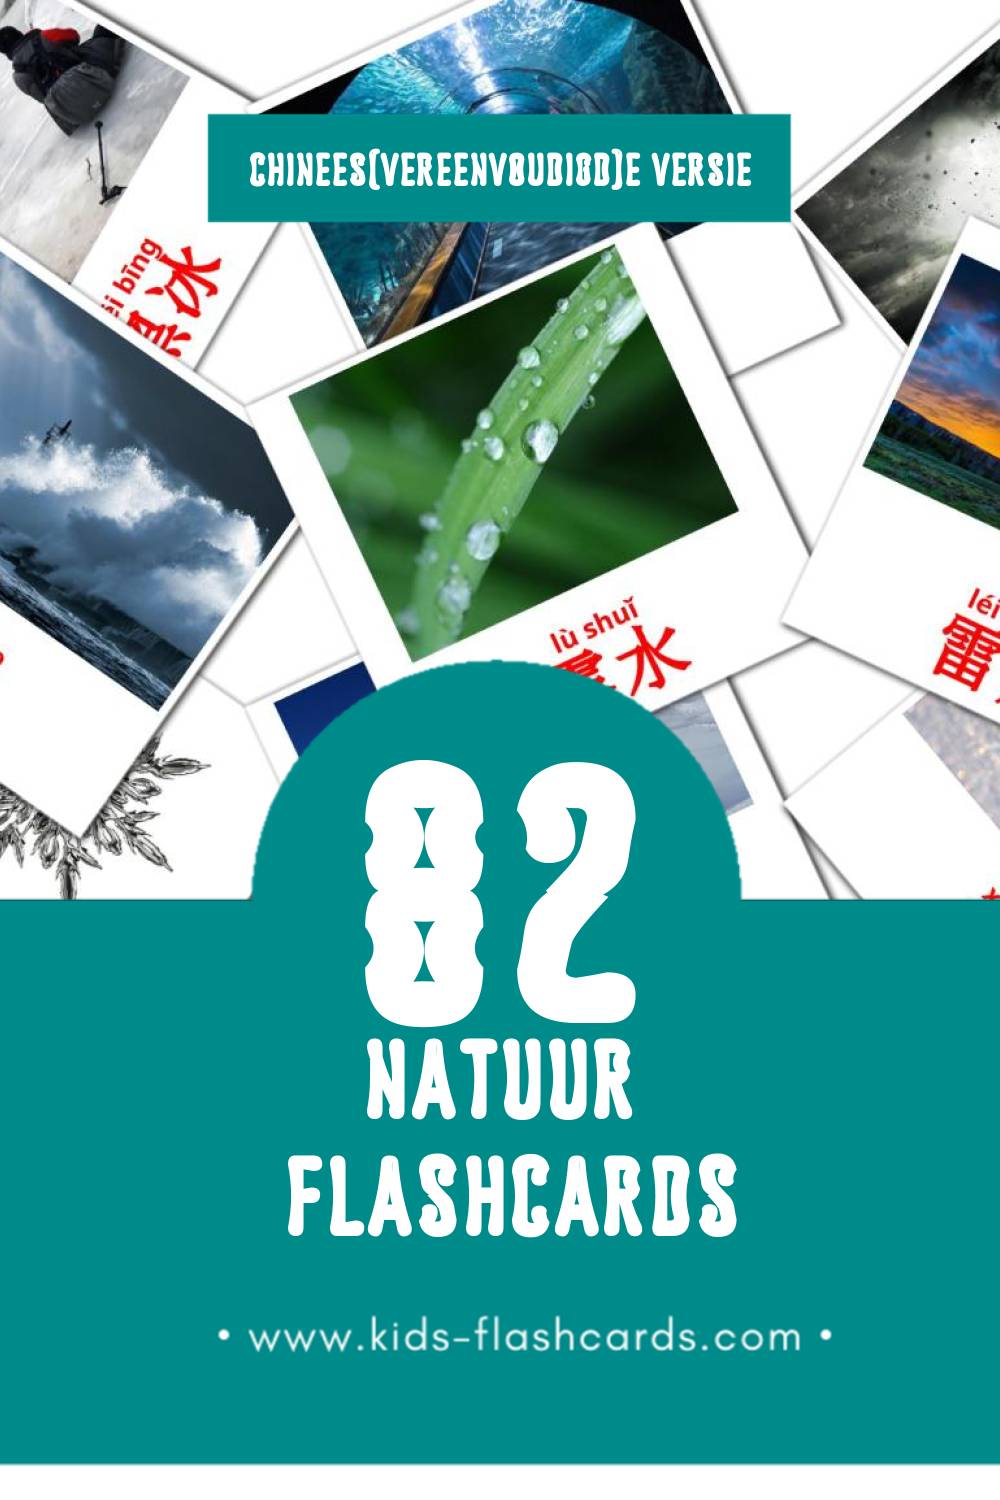 Visuele 大自然 Flashcards voor Kleuters (82 kaarten in het Chinees(vereenvoudigd))